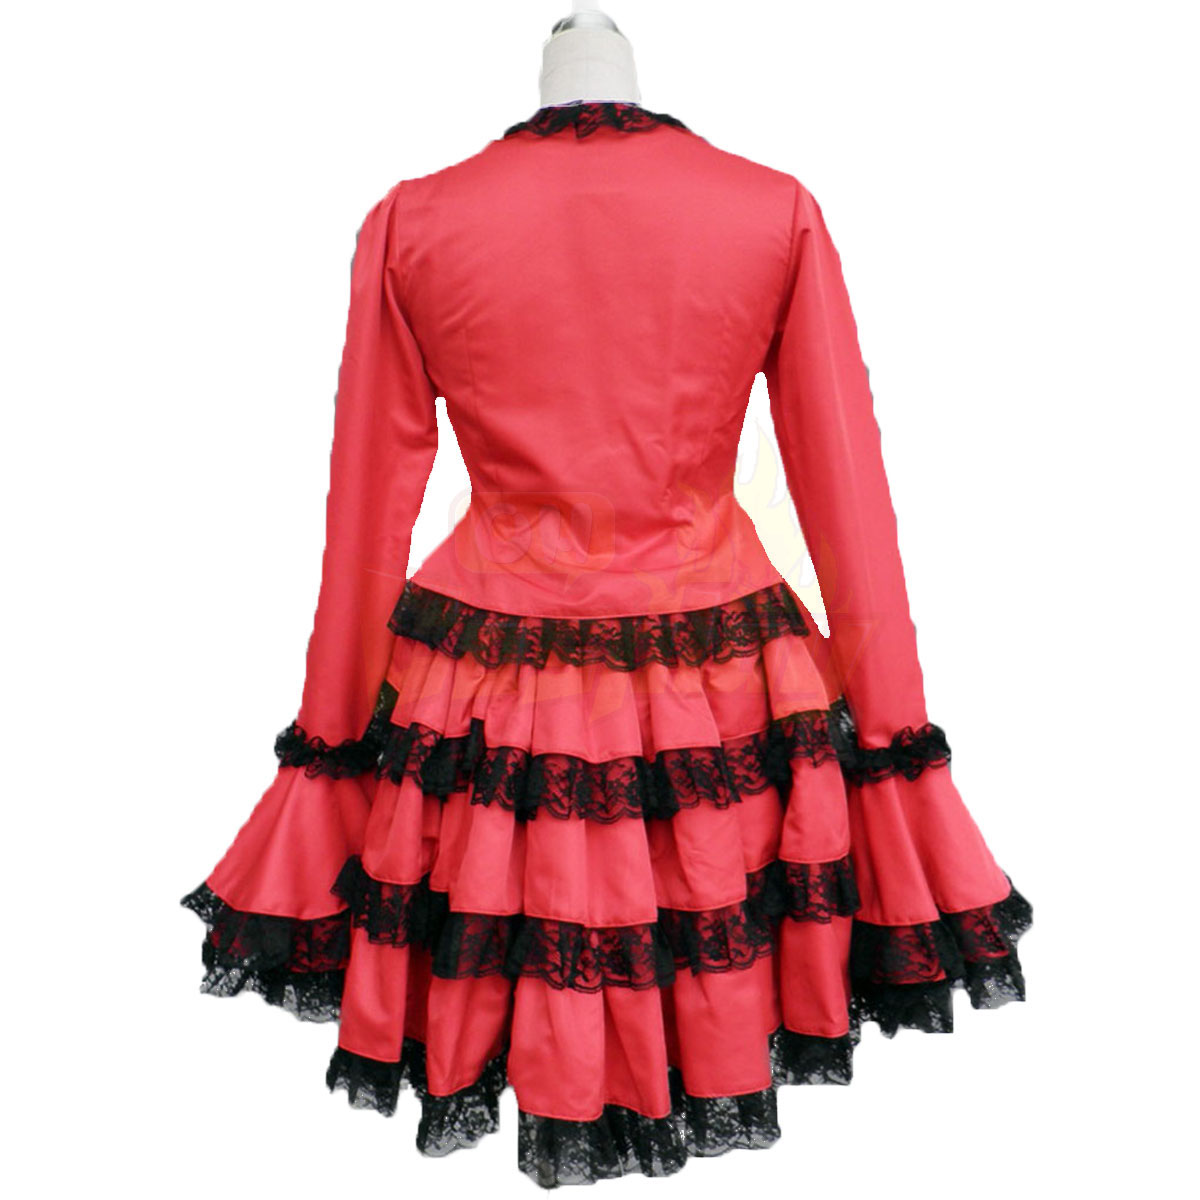 Fantasias Cultura Lolita Coat Tire Vermelho Vestidos Média Trajes Cosplay